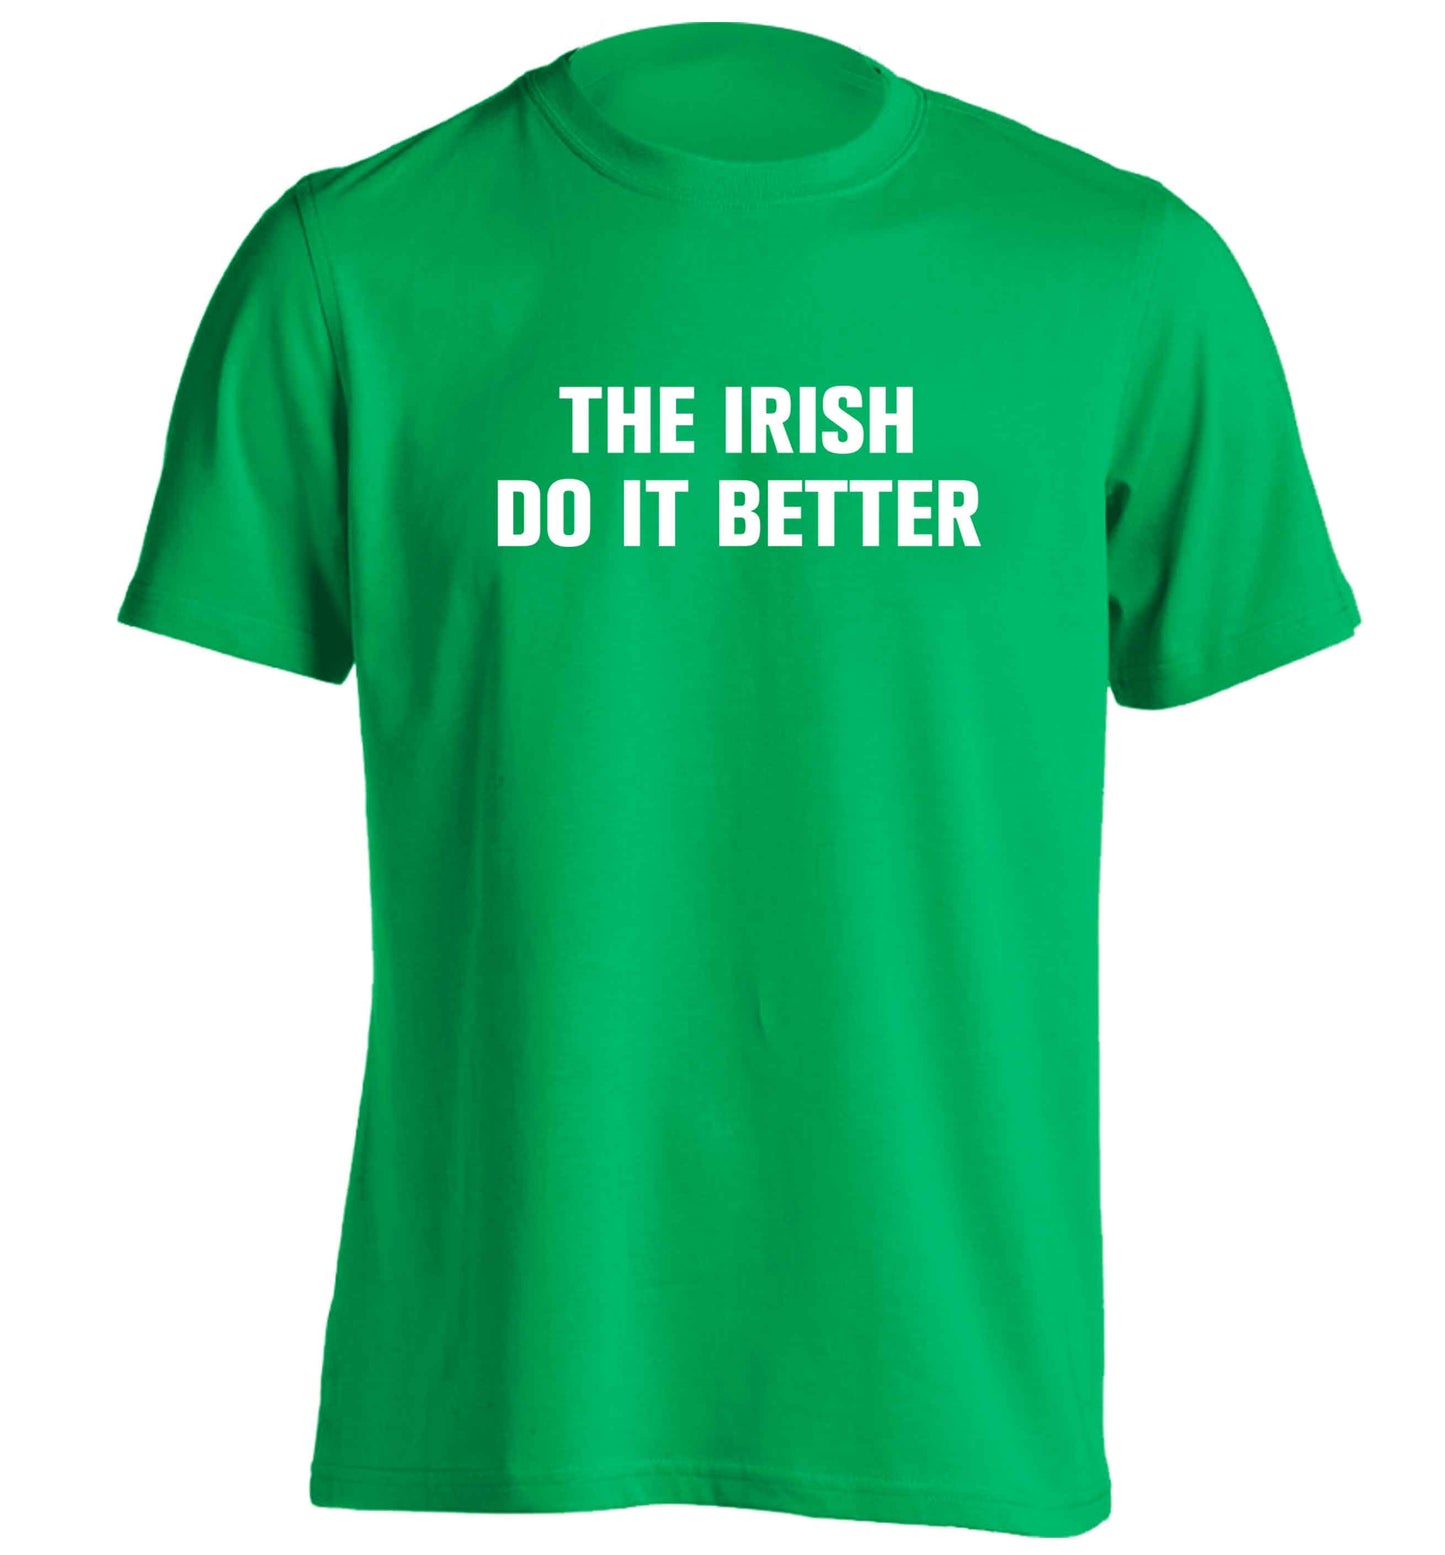 The Irish do it better adults unisex green Tshirt 2XL